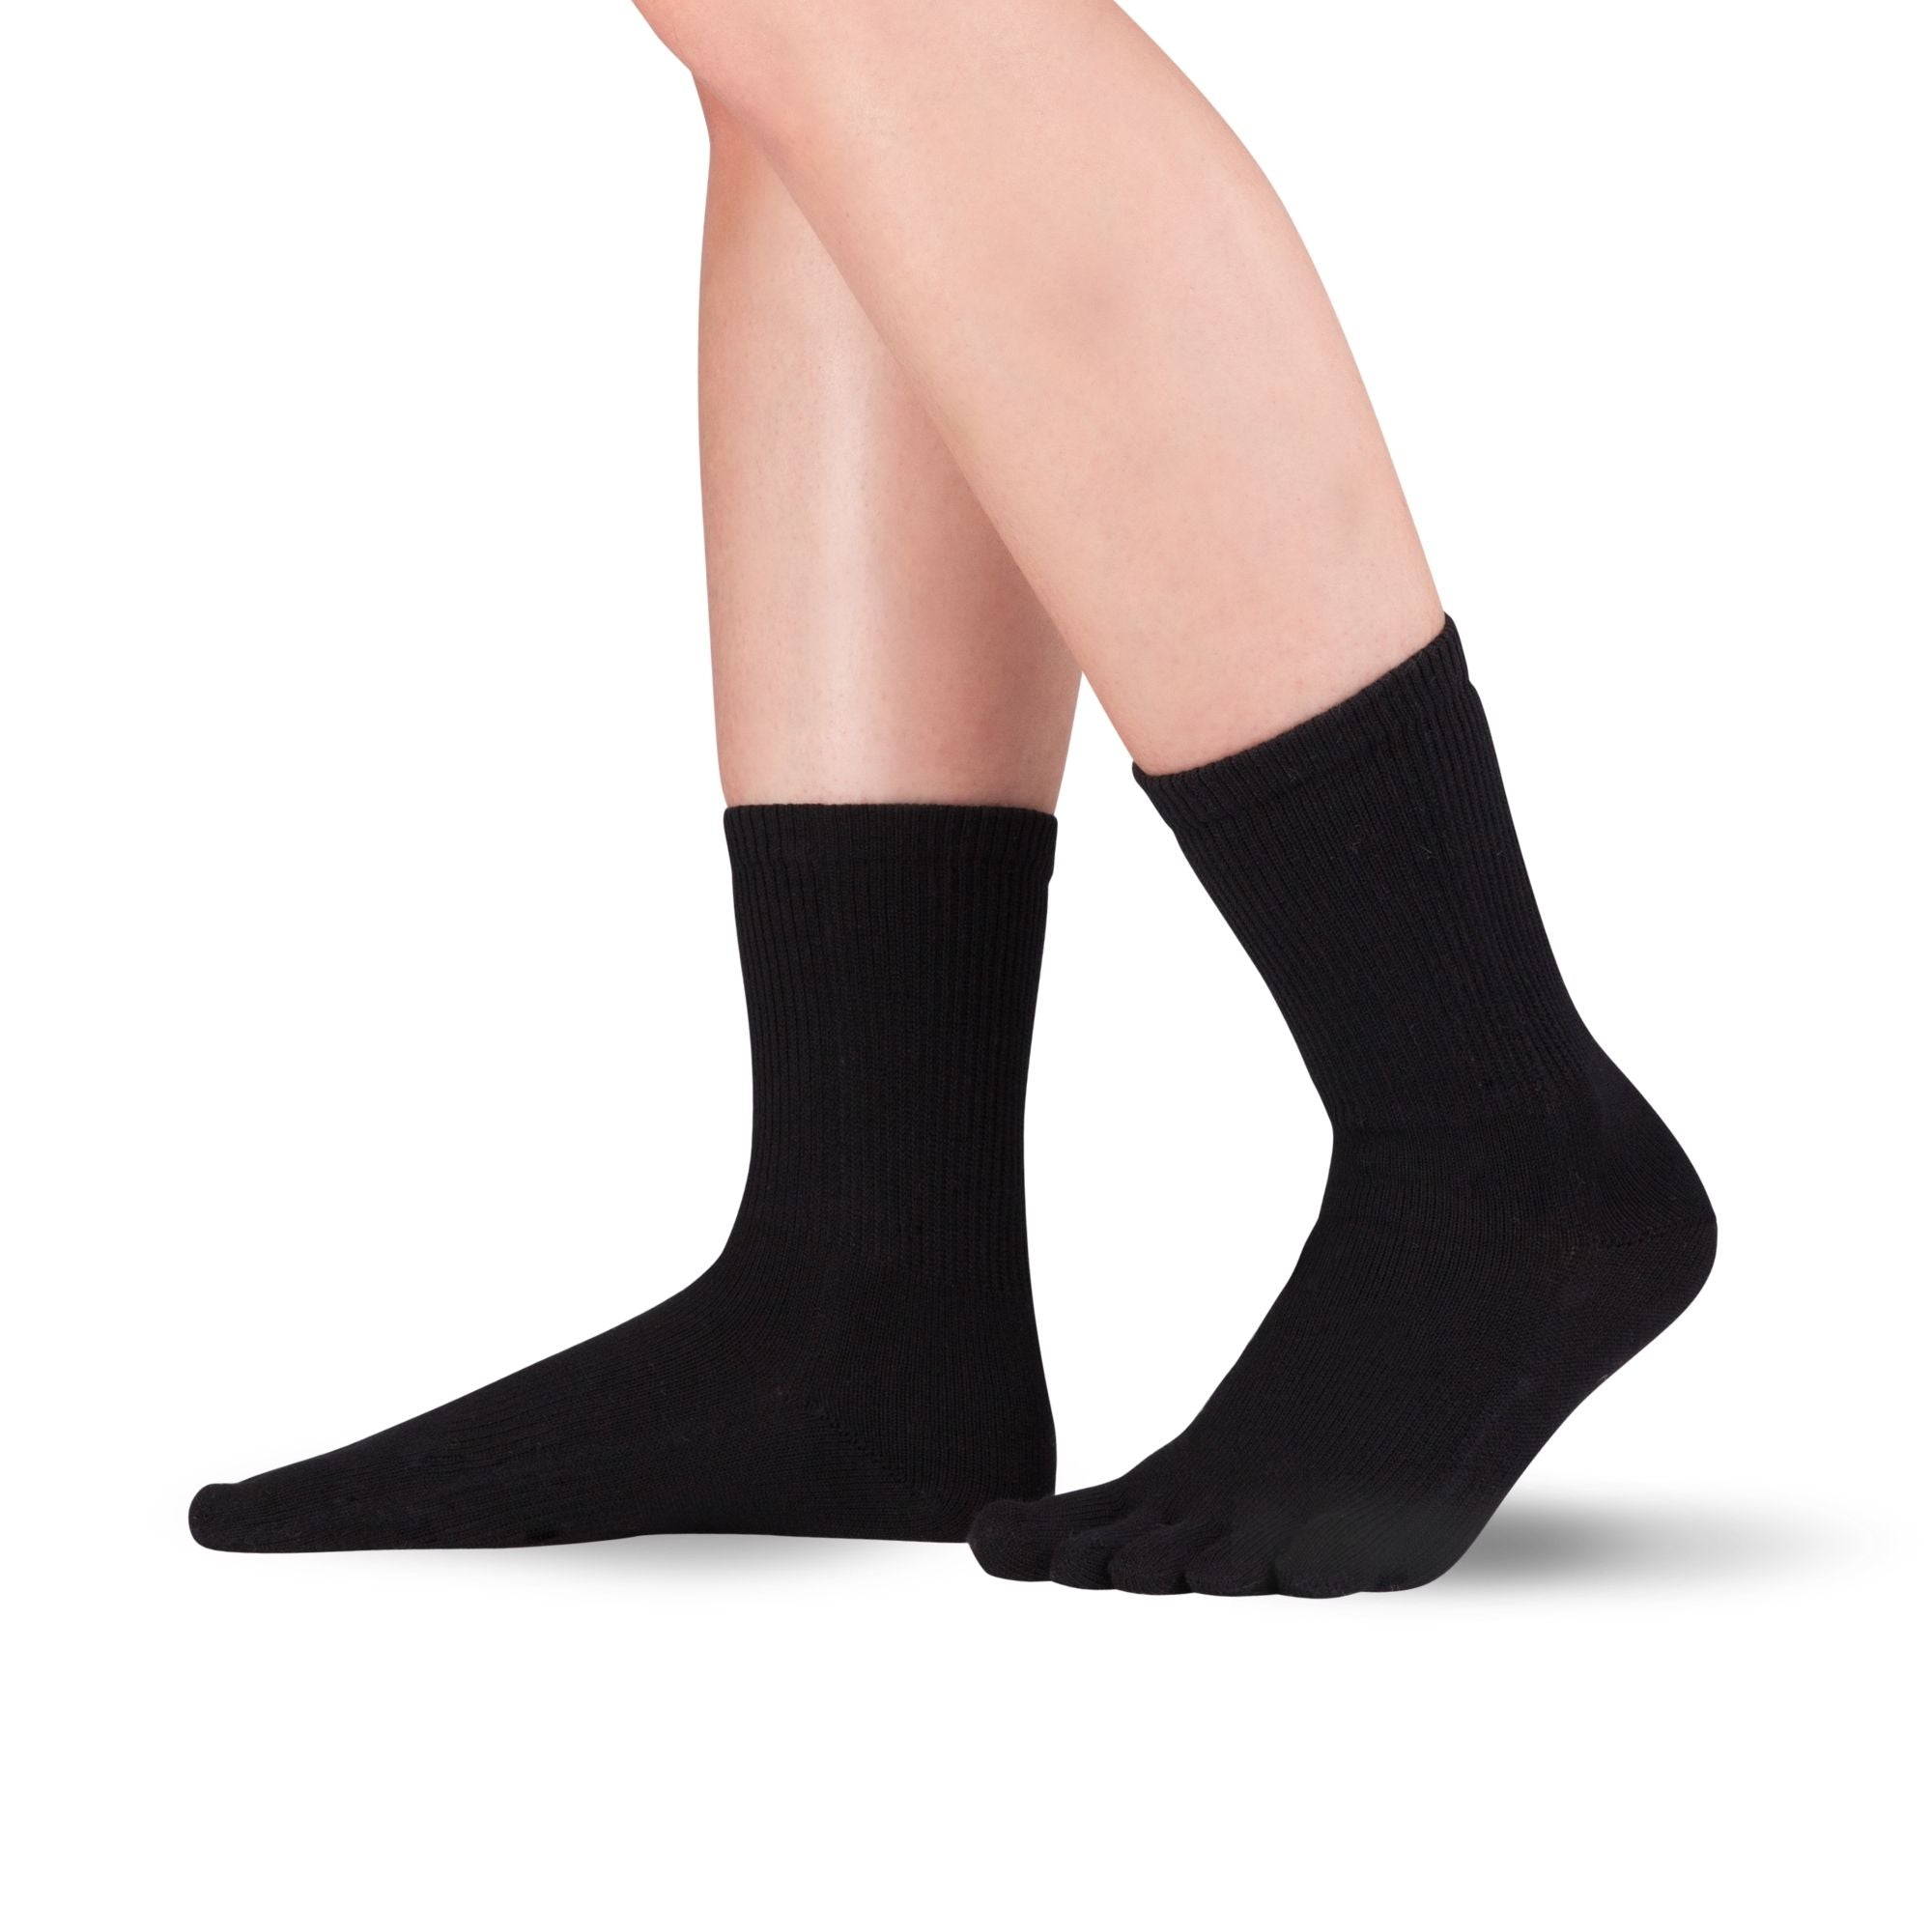 Dr. Foot Bunion toe socks from Knitido in black